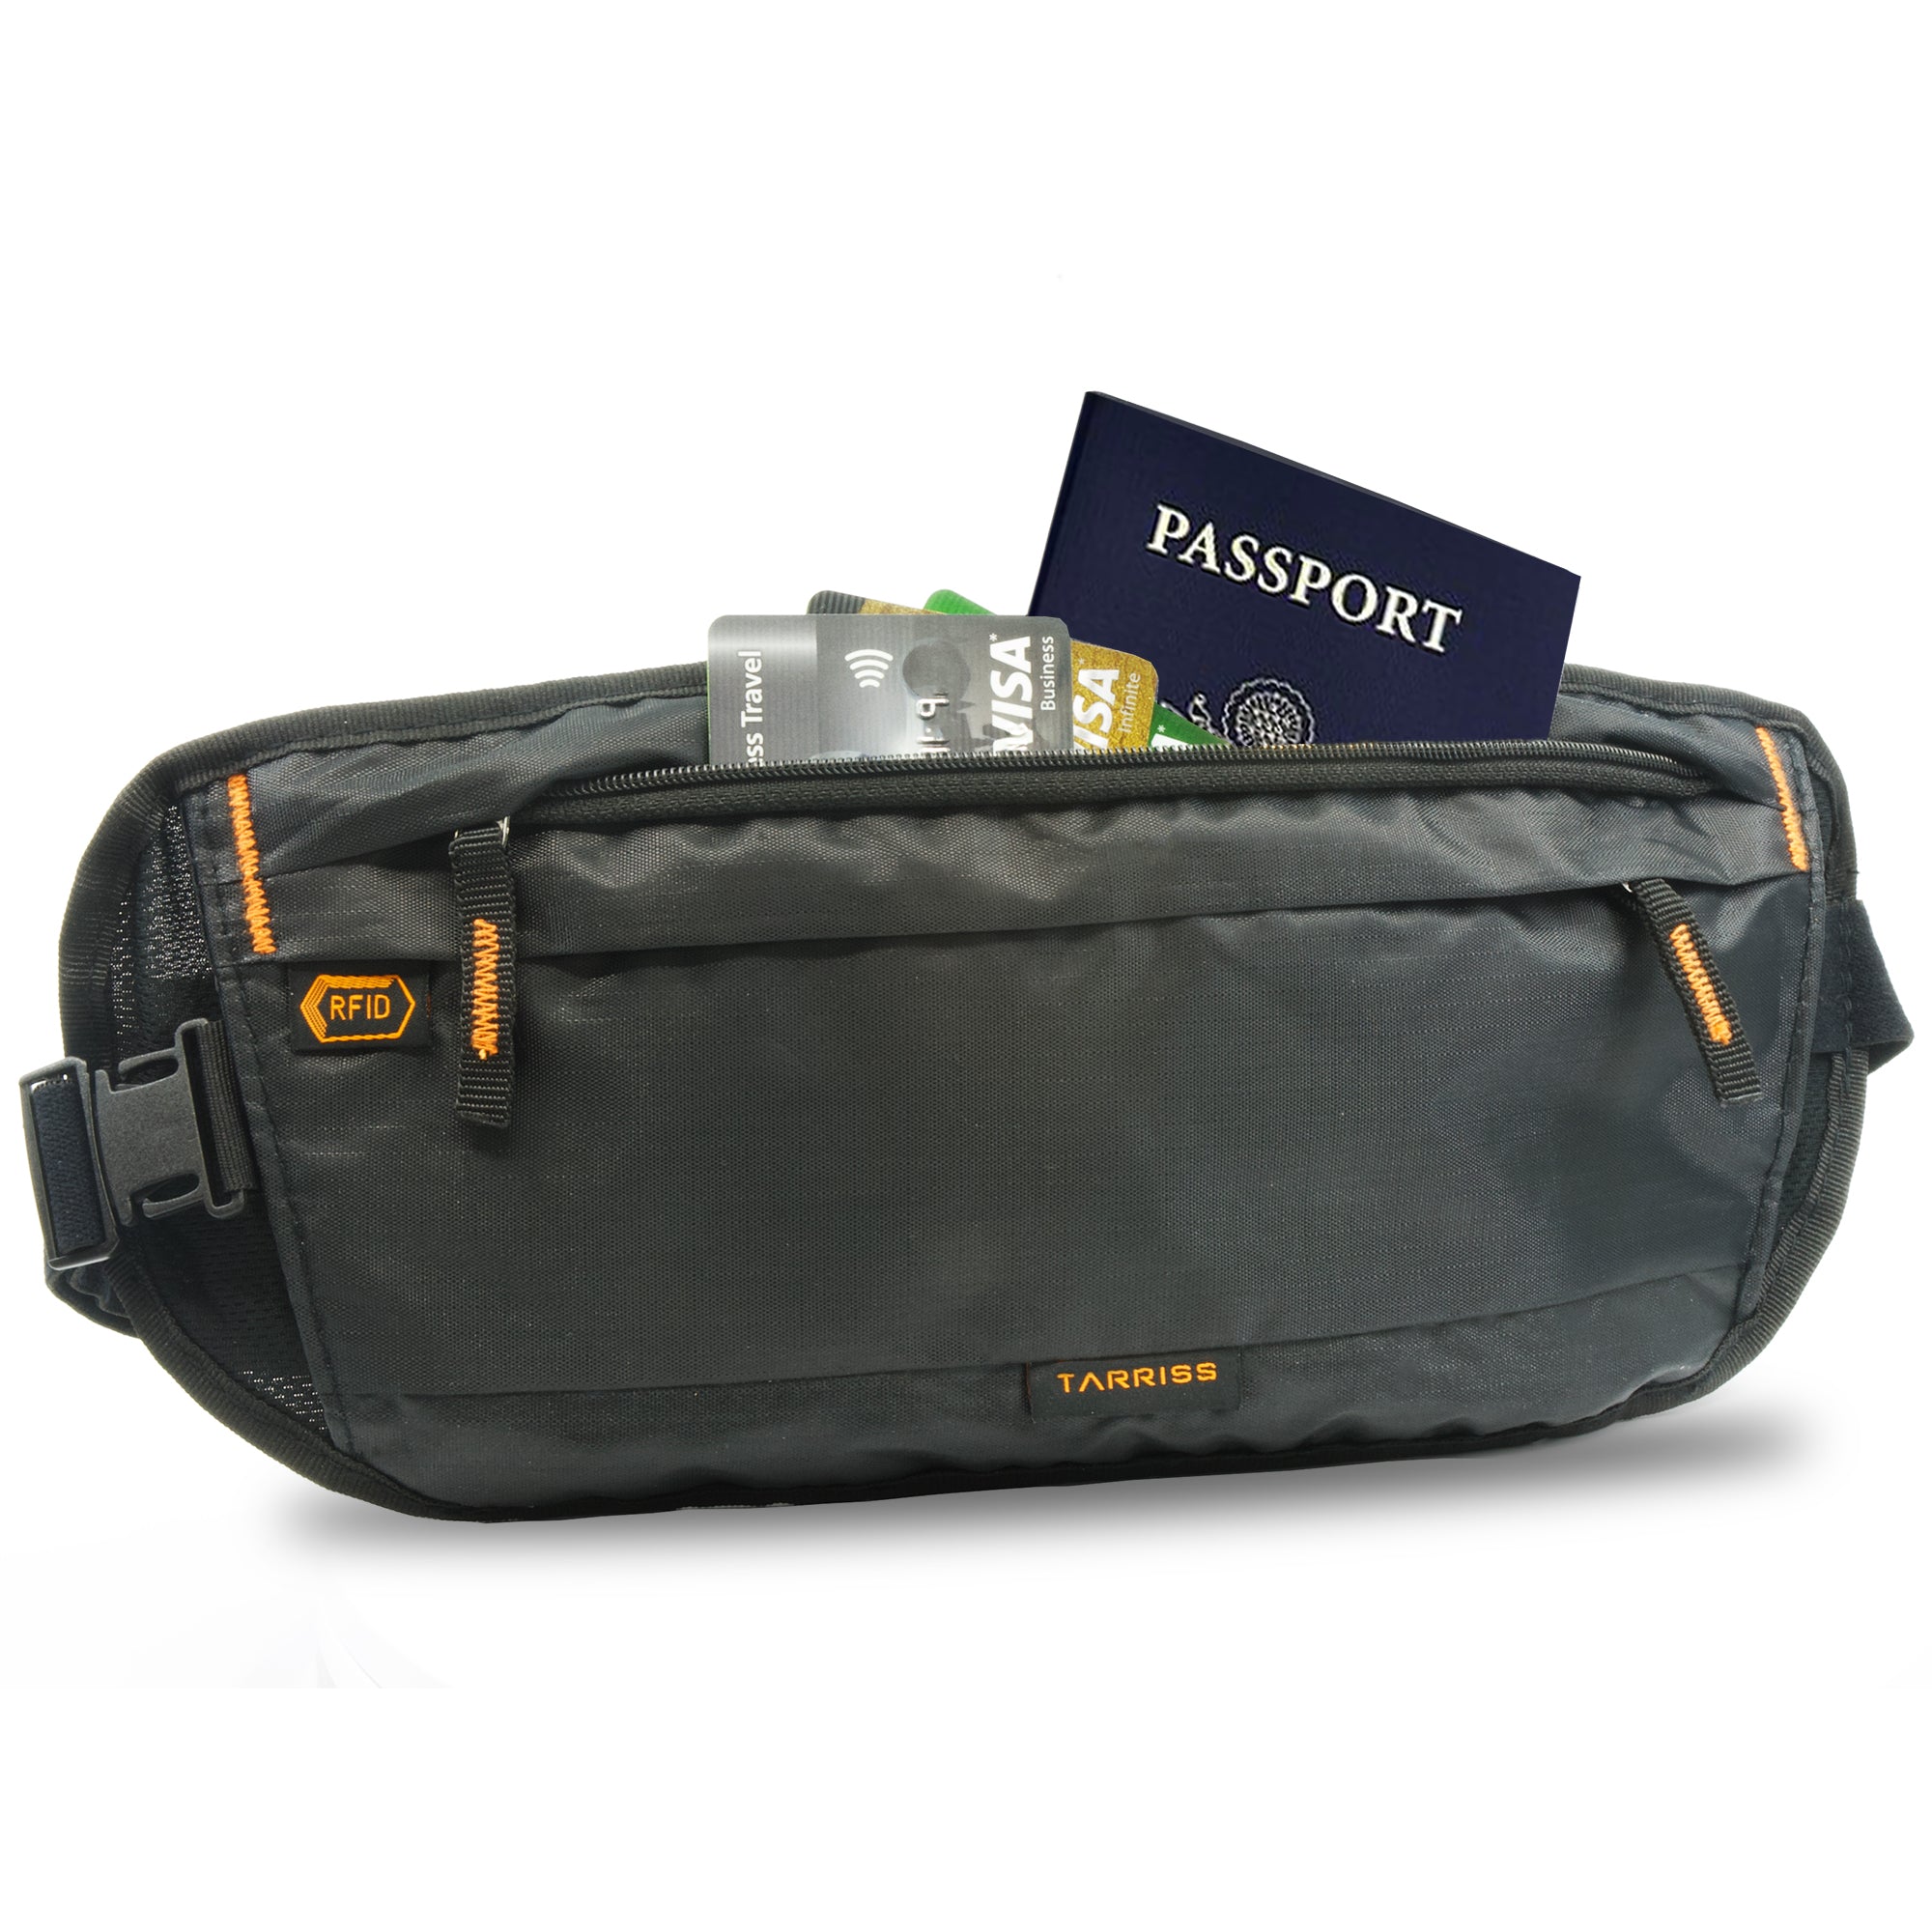 Passport Bag Travel Wallet with Shoulder Strap-Family Passport Holder of 5,  RFID Blocking Bag for Men Women, Travel for Flying - AliExpress